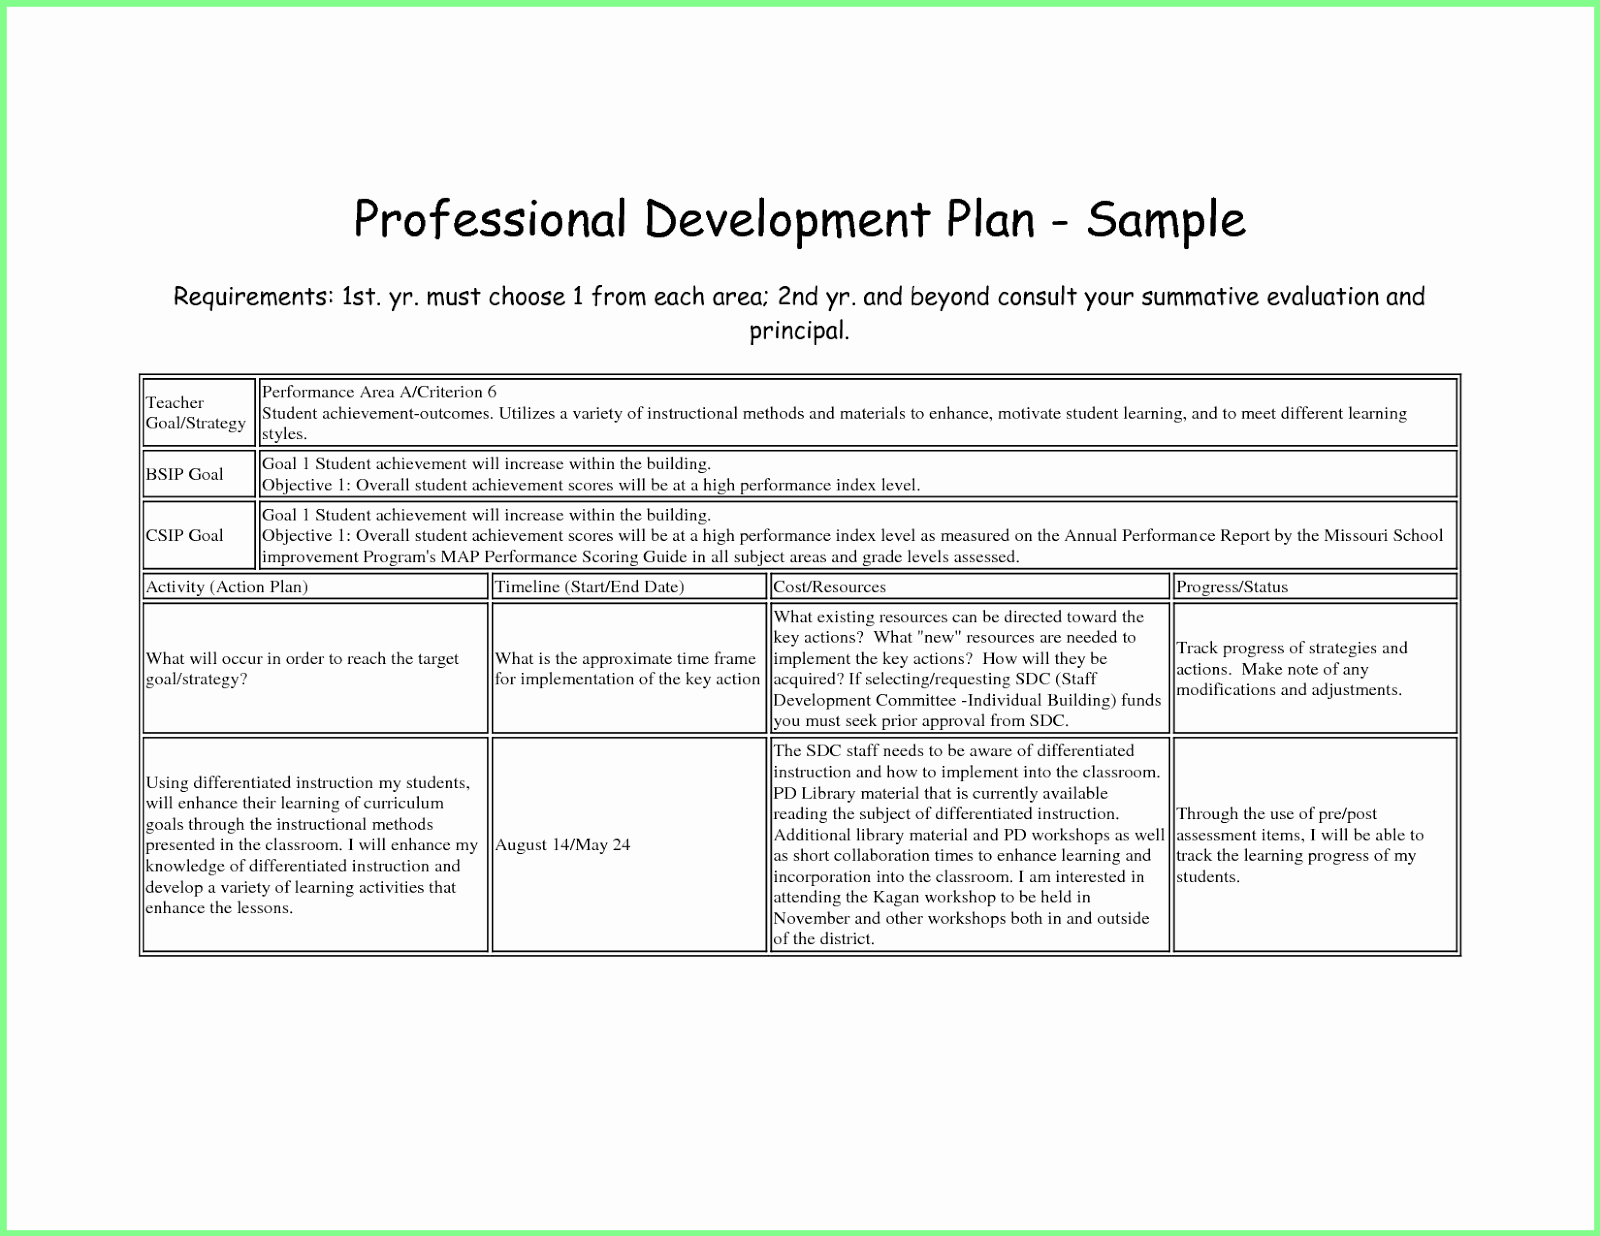 Professional Development Plan Template Best Of Image Result for Professional Development Plan